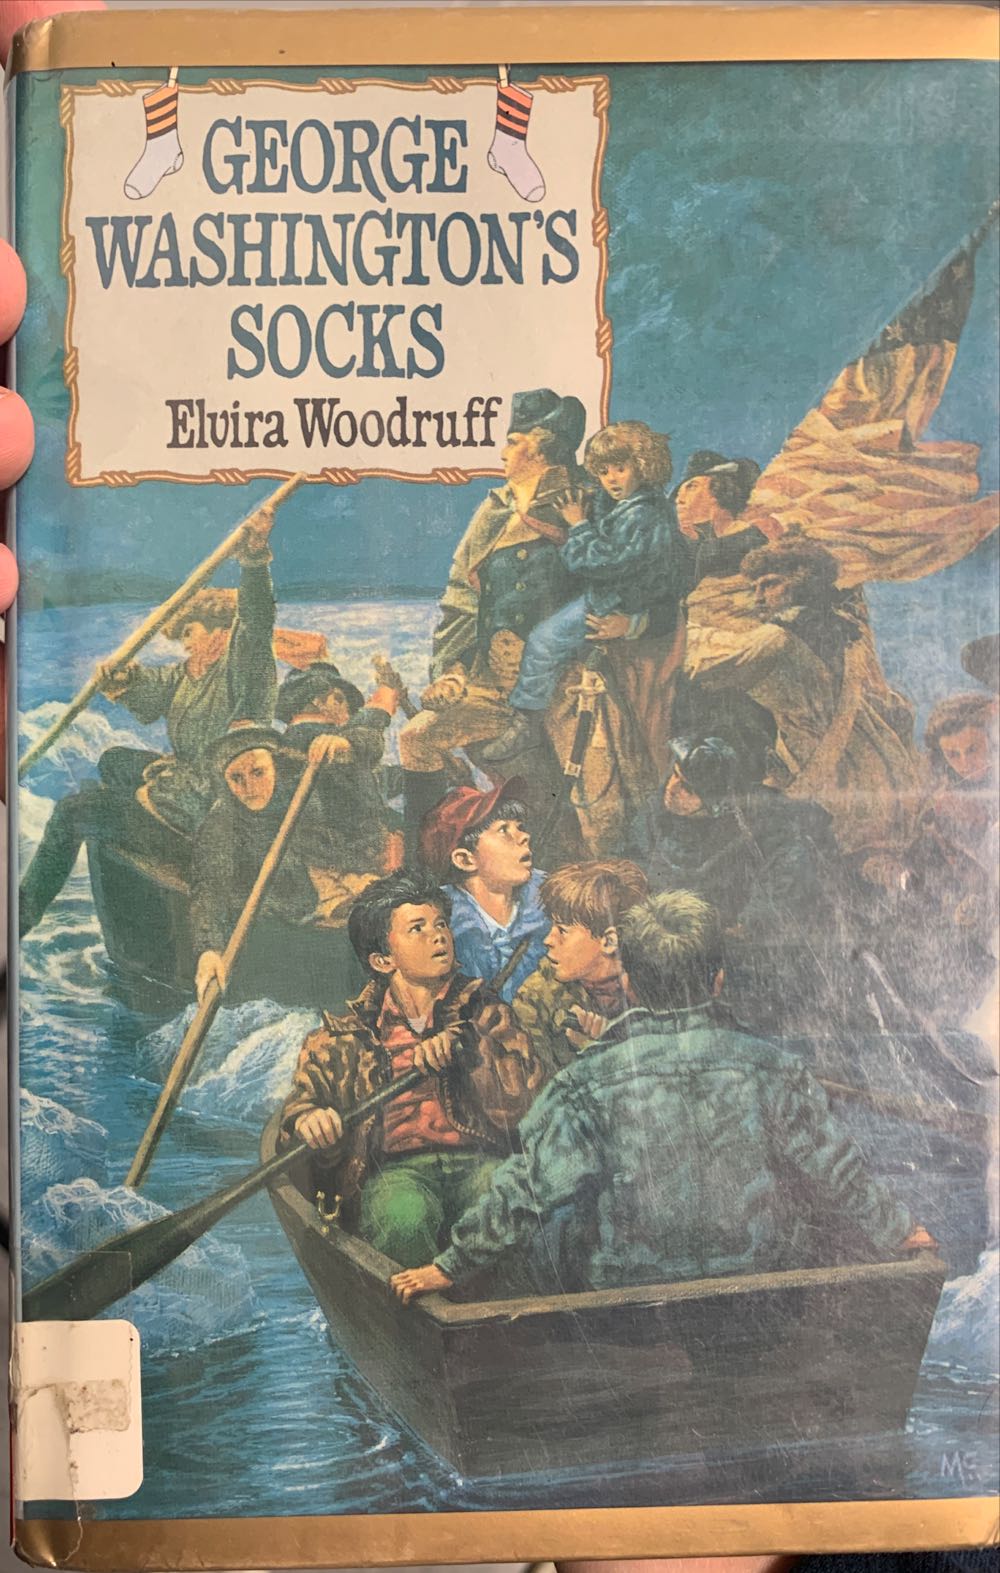 George Washington’s Socks - Elvira Woodruff (New York, N.Y. : Scholastic) book collectible [Barcode 9780590440356] - Main Image 1